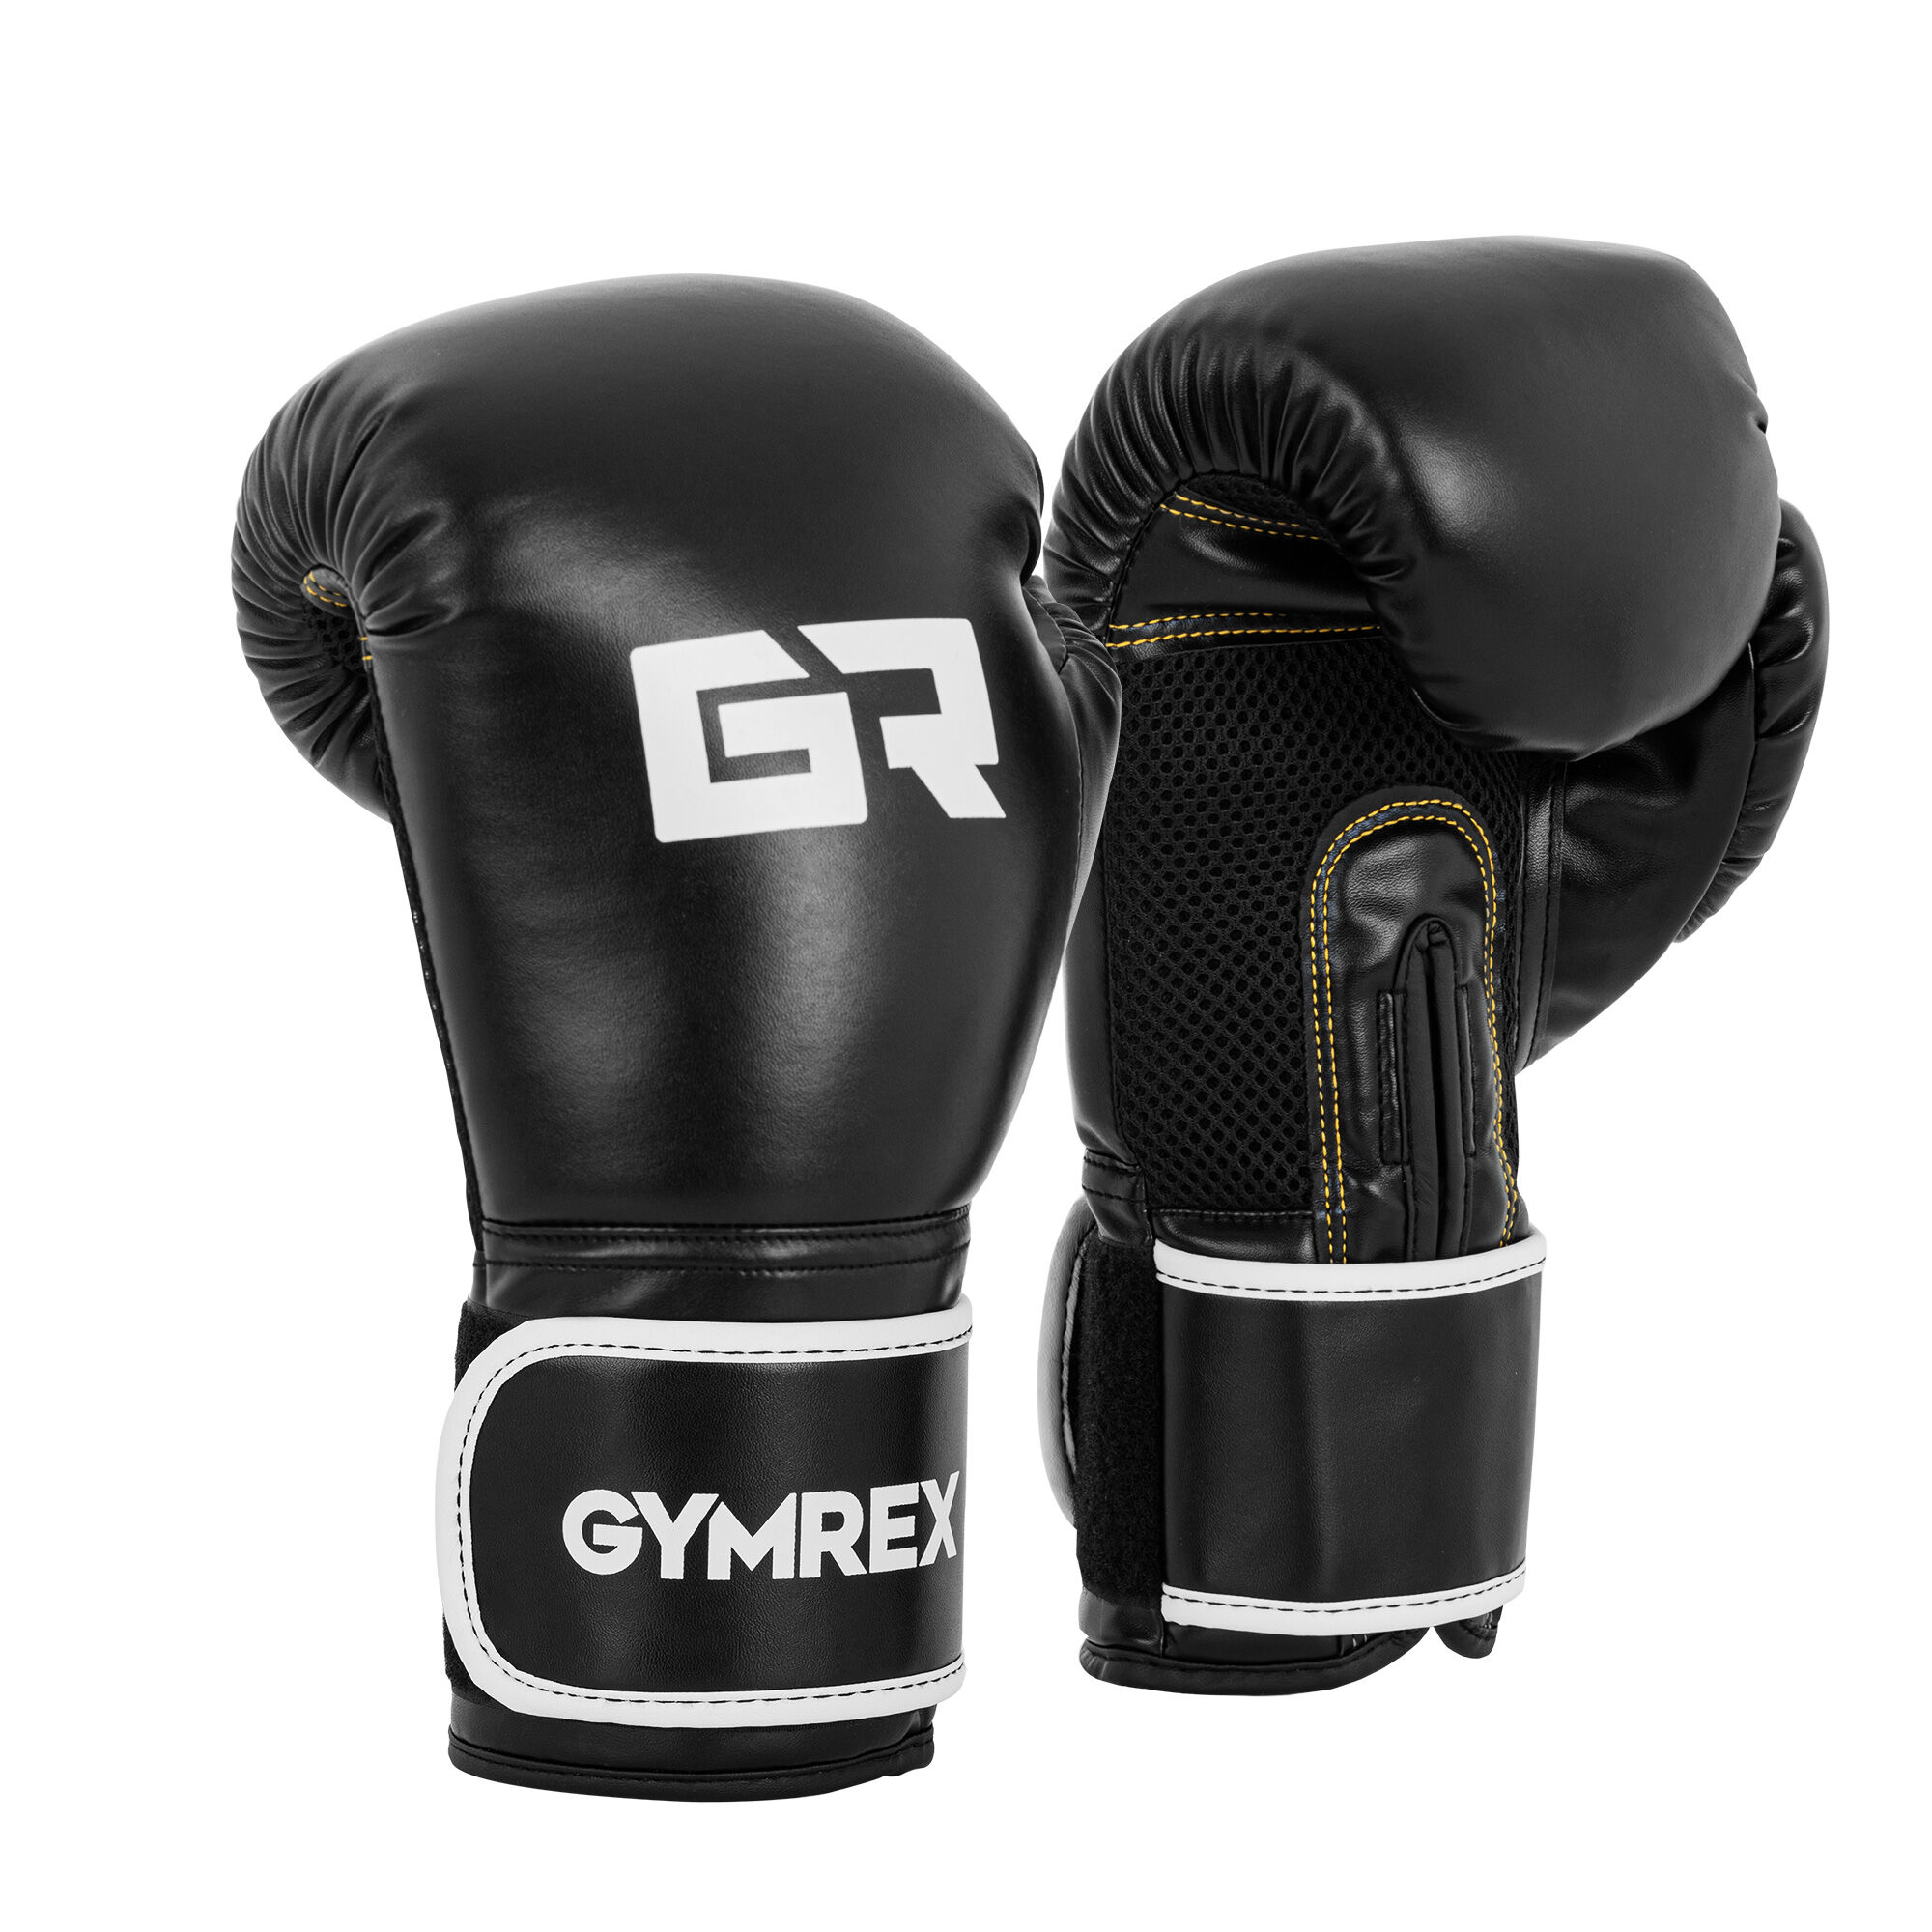 Gymrex Boxing Gloves - 14 oz - interior mesh - black